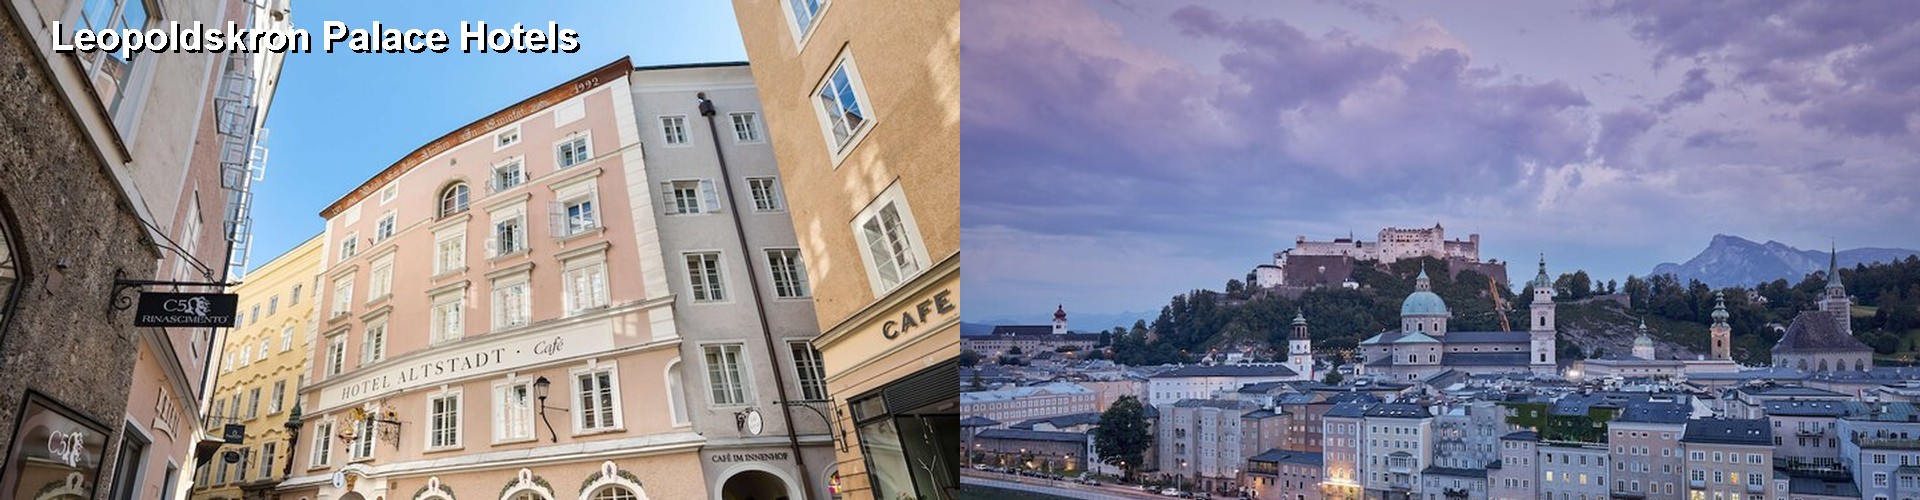 5 Best Hotels near Leopoldskron Palace